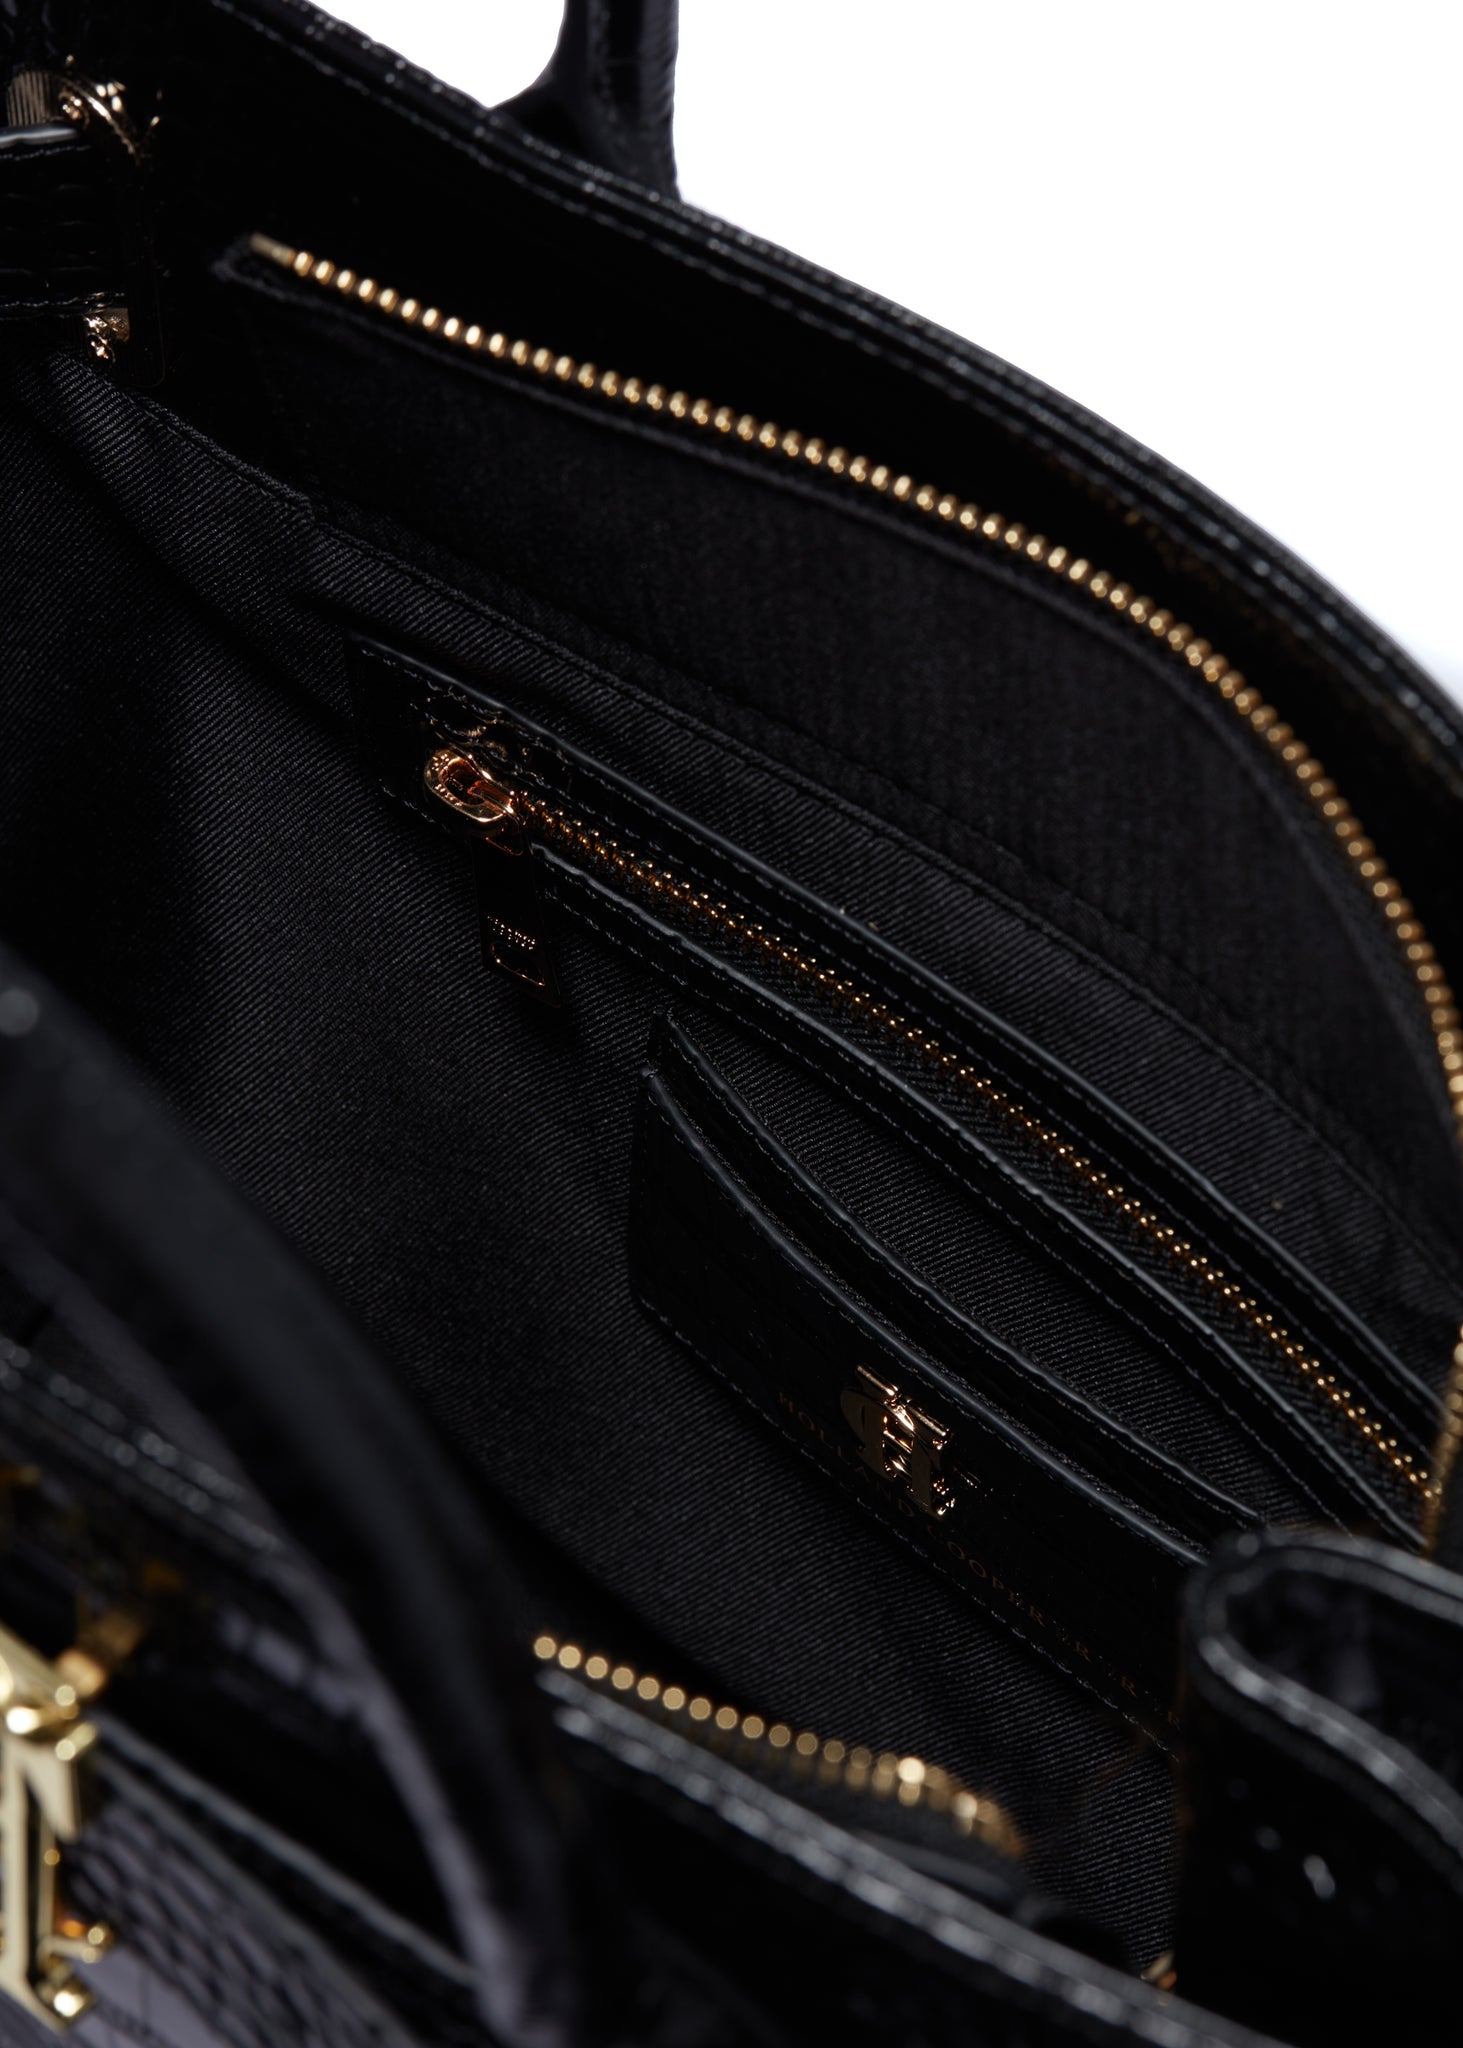 internal card holder and zip pocket in womens black croc embossed leather tote bag